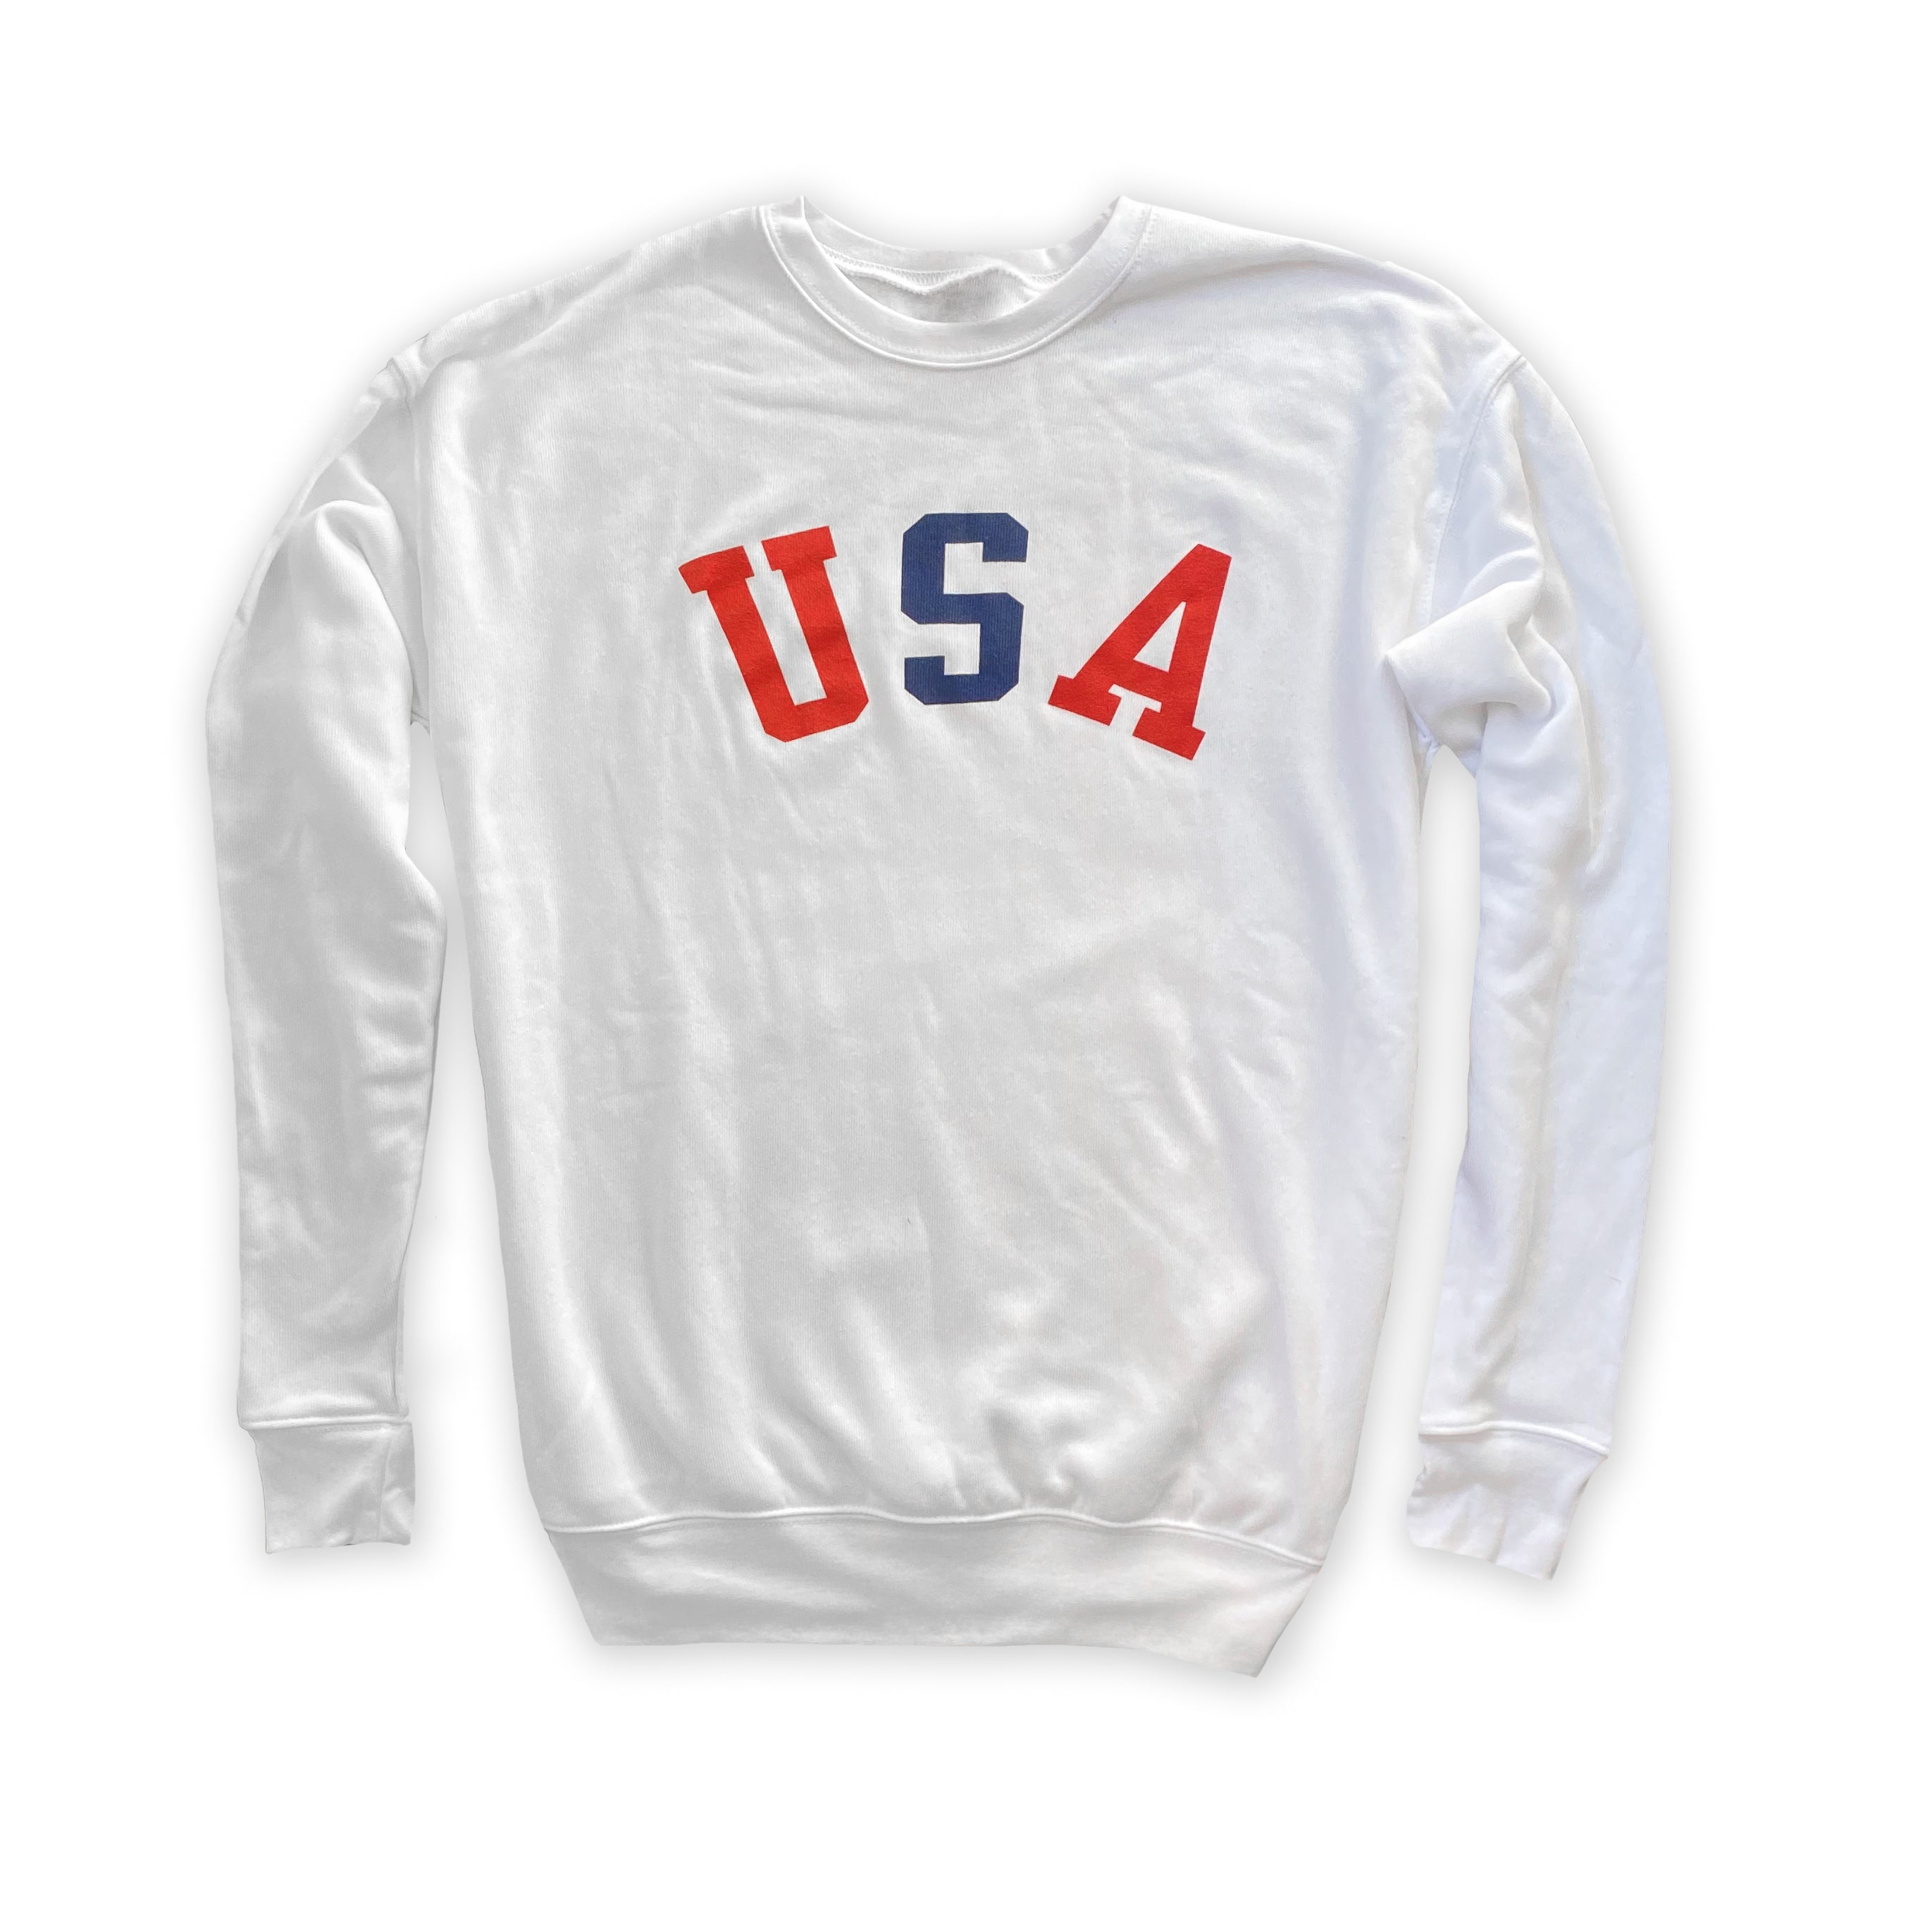 White USA Americana sweatshirt